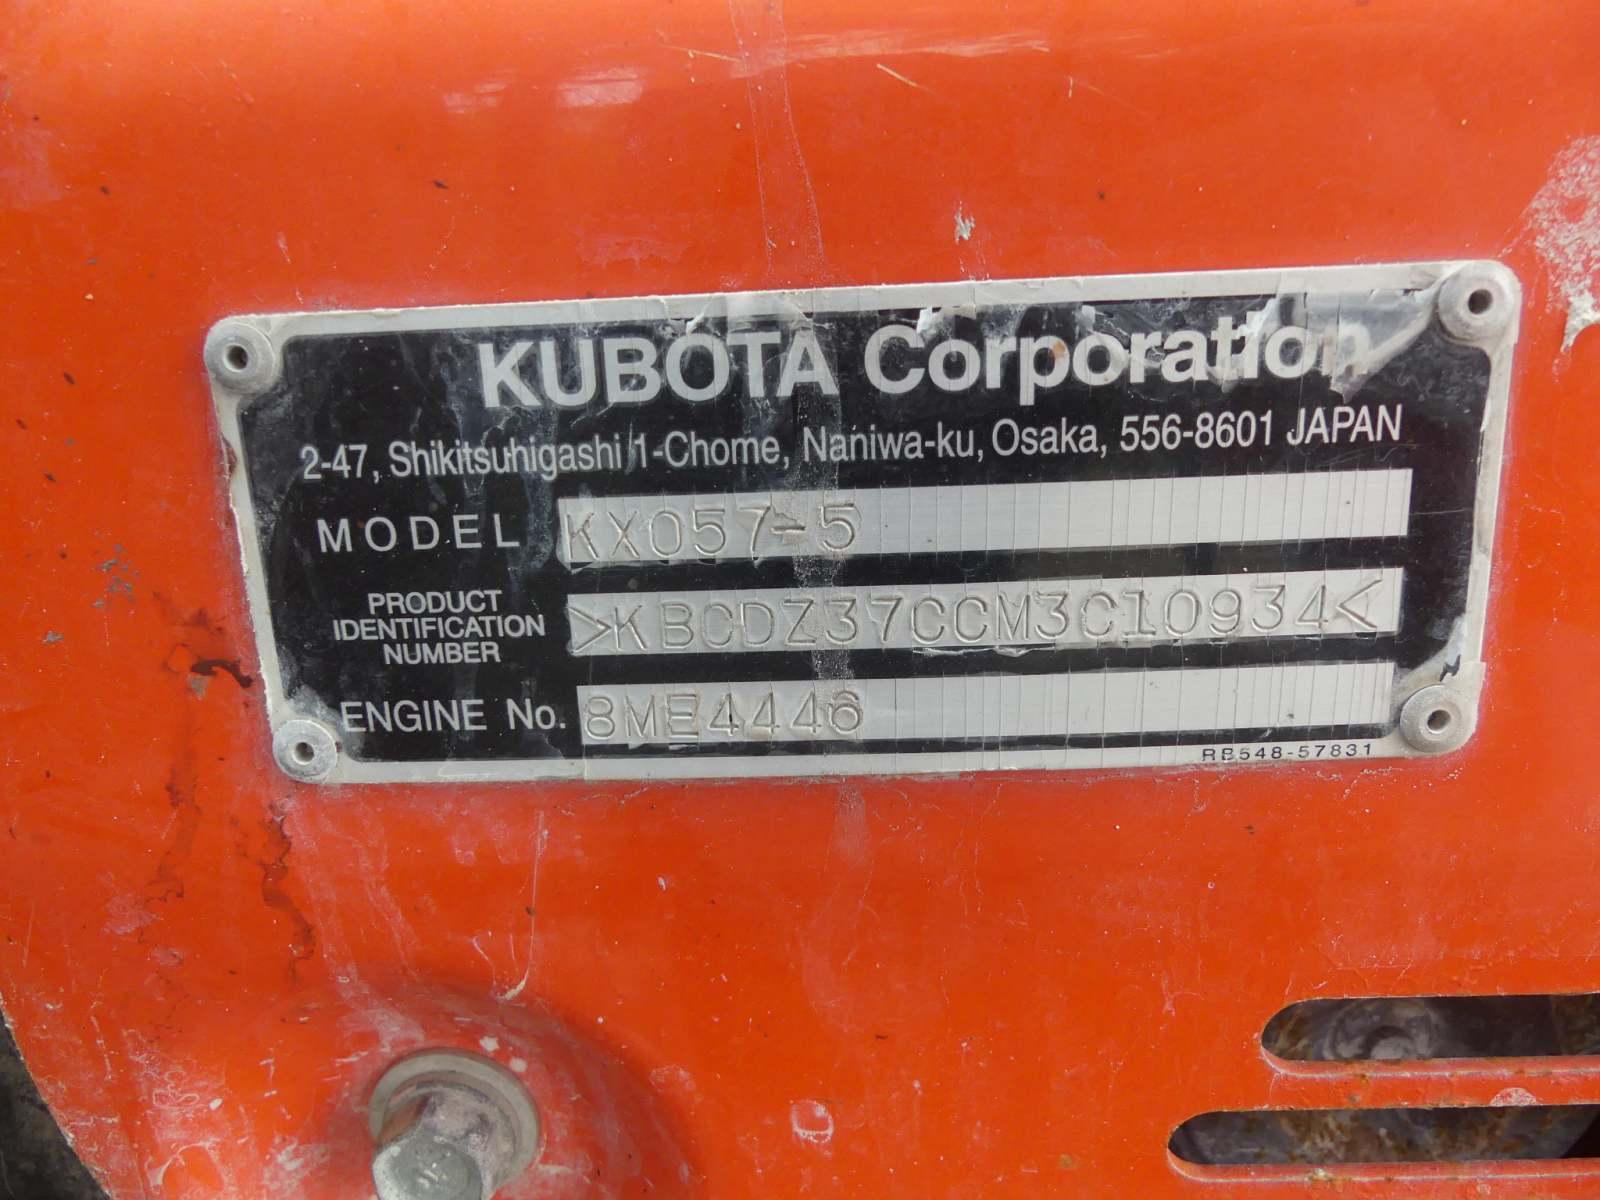 2021 Kubota KX057-5 Mini Excavator, s/n KBCDZ37CCM3C10934: Encl. Cab, Blade